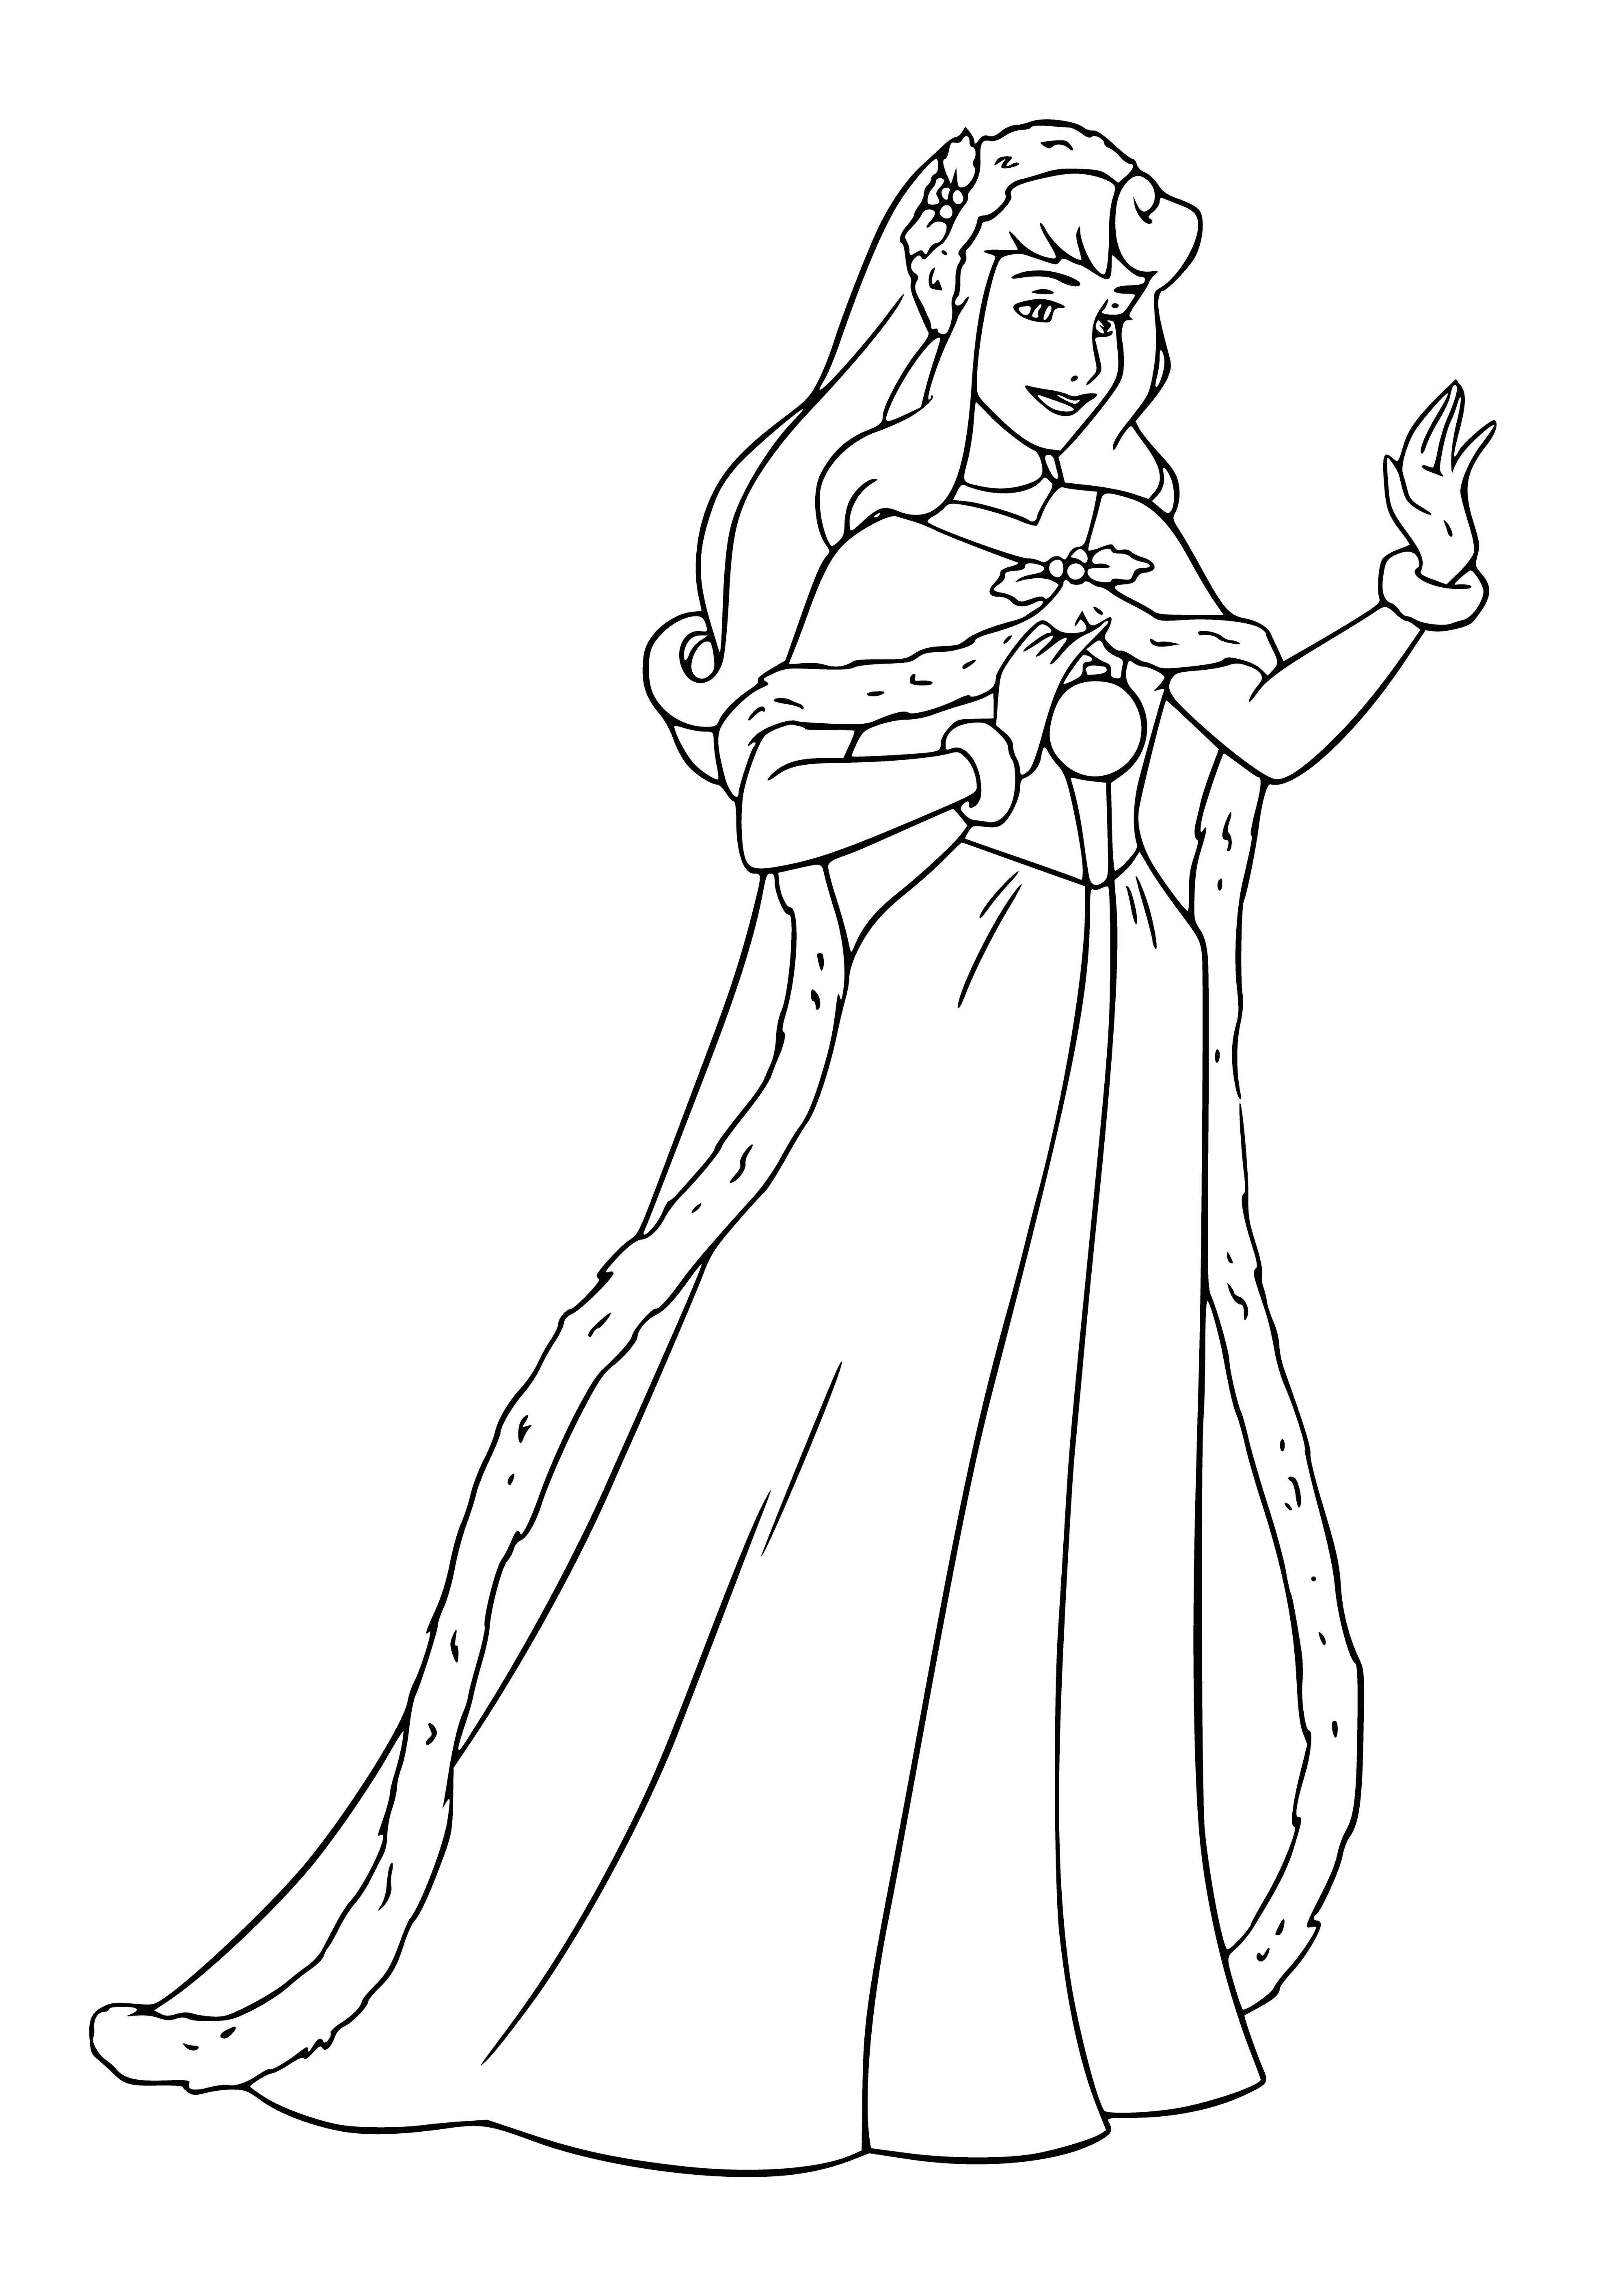 Princess aurora coloring page